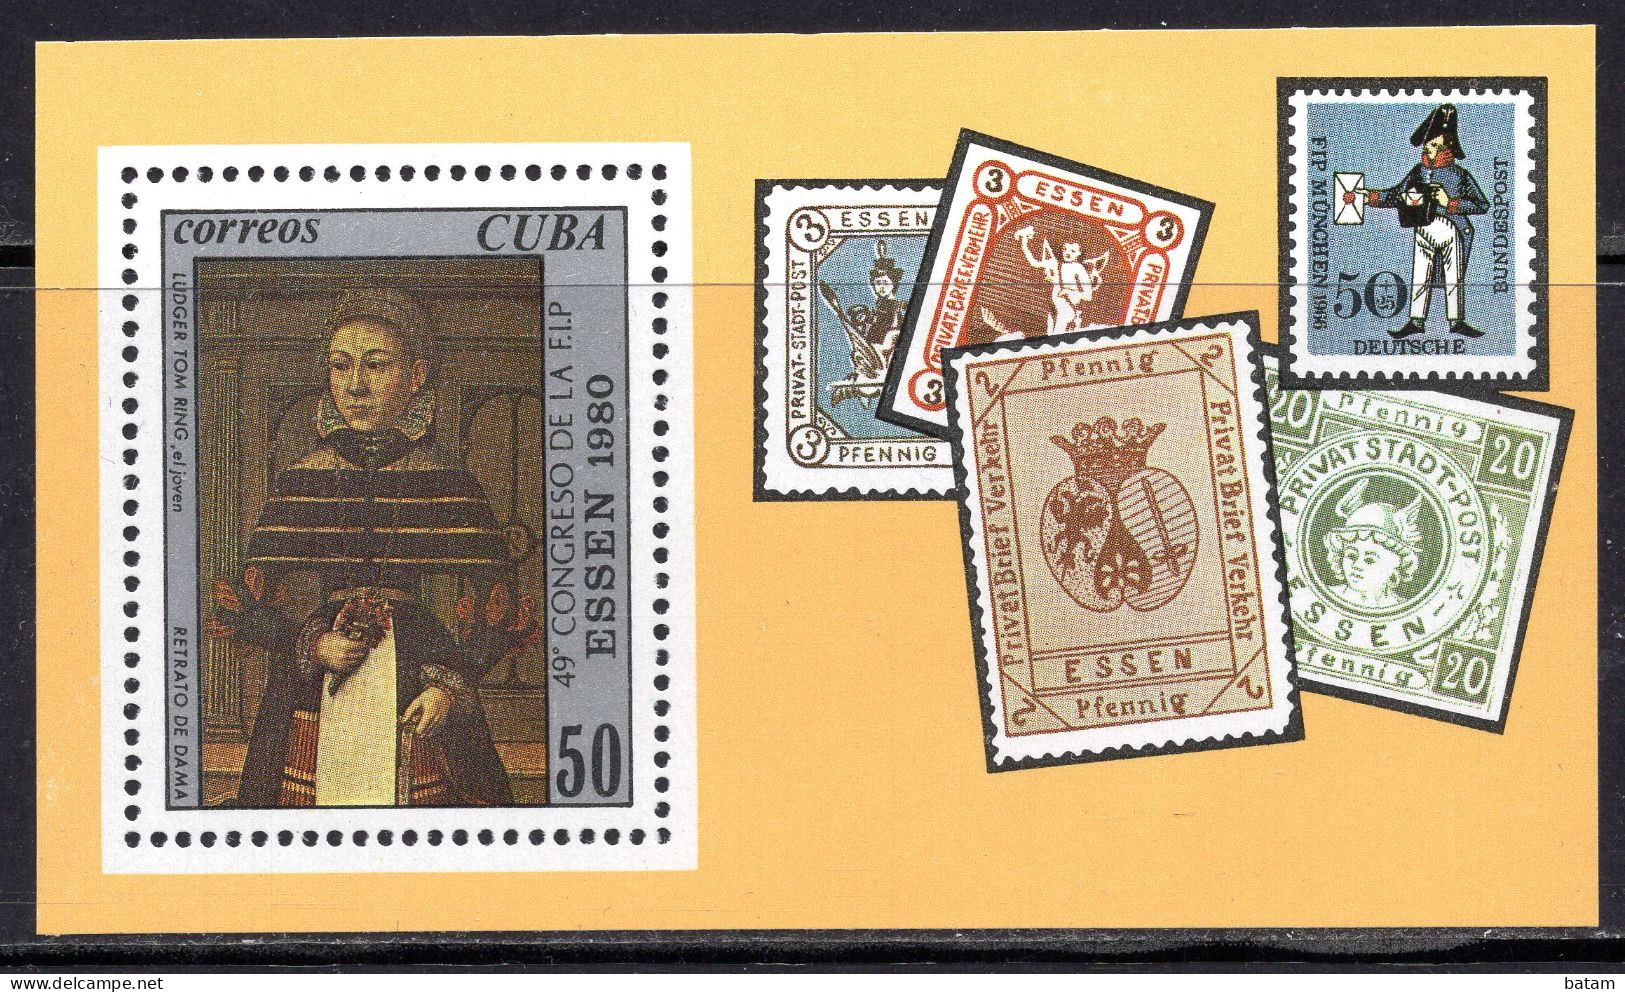 Cuba 1980 - Philatelic Federation Congress - Essen - Stamp On Stamp - MNH S/S - Unused Stamps